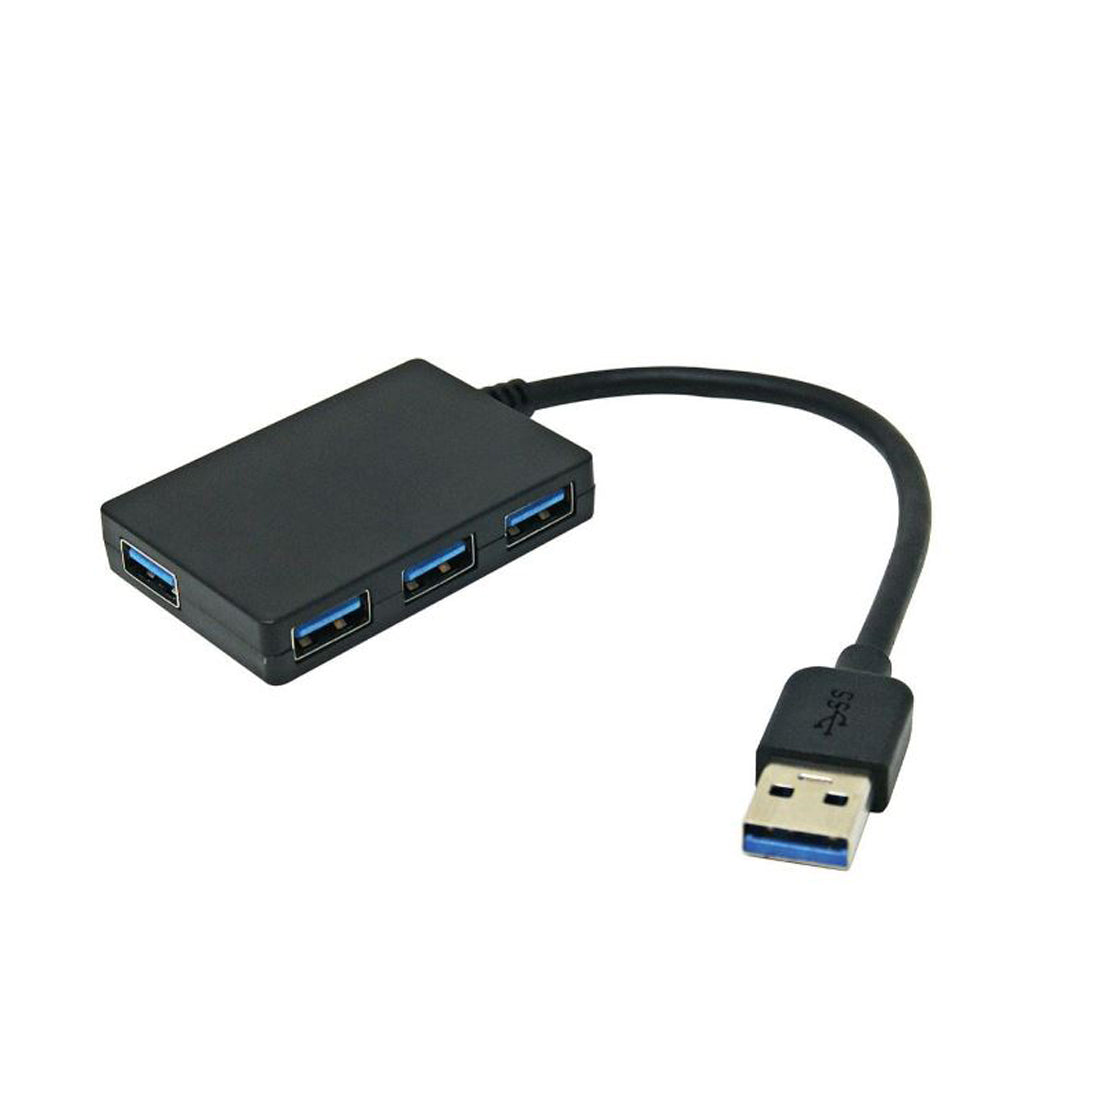 ISNATCH 4 Port USB 3.02 Hub, Multiport 5Gbps Fast Data Transfer Adapter